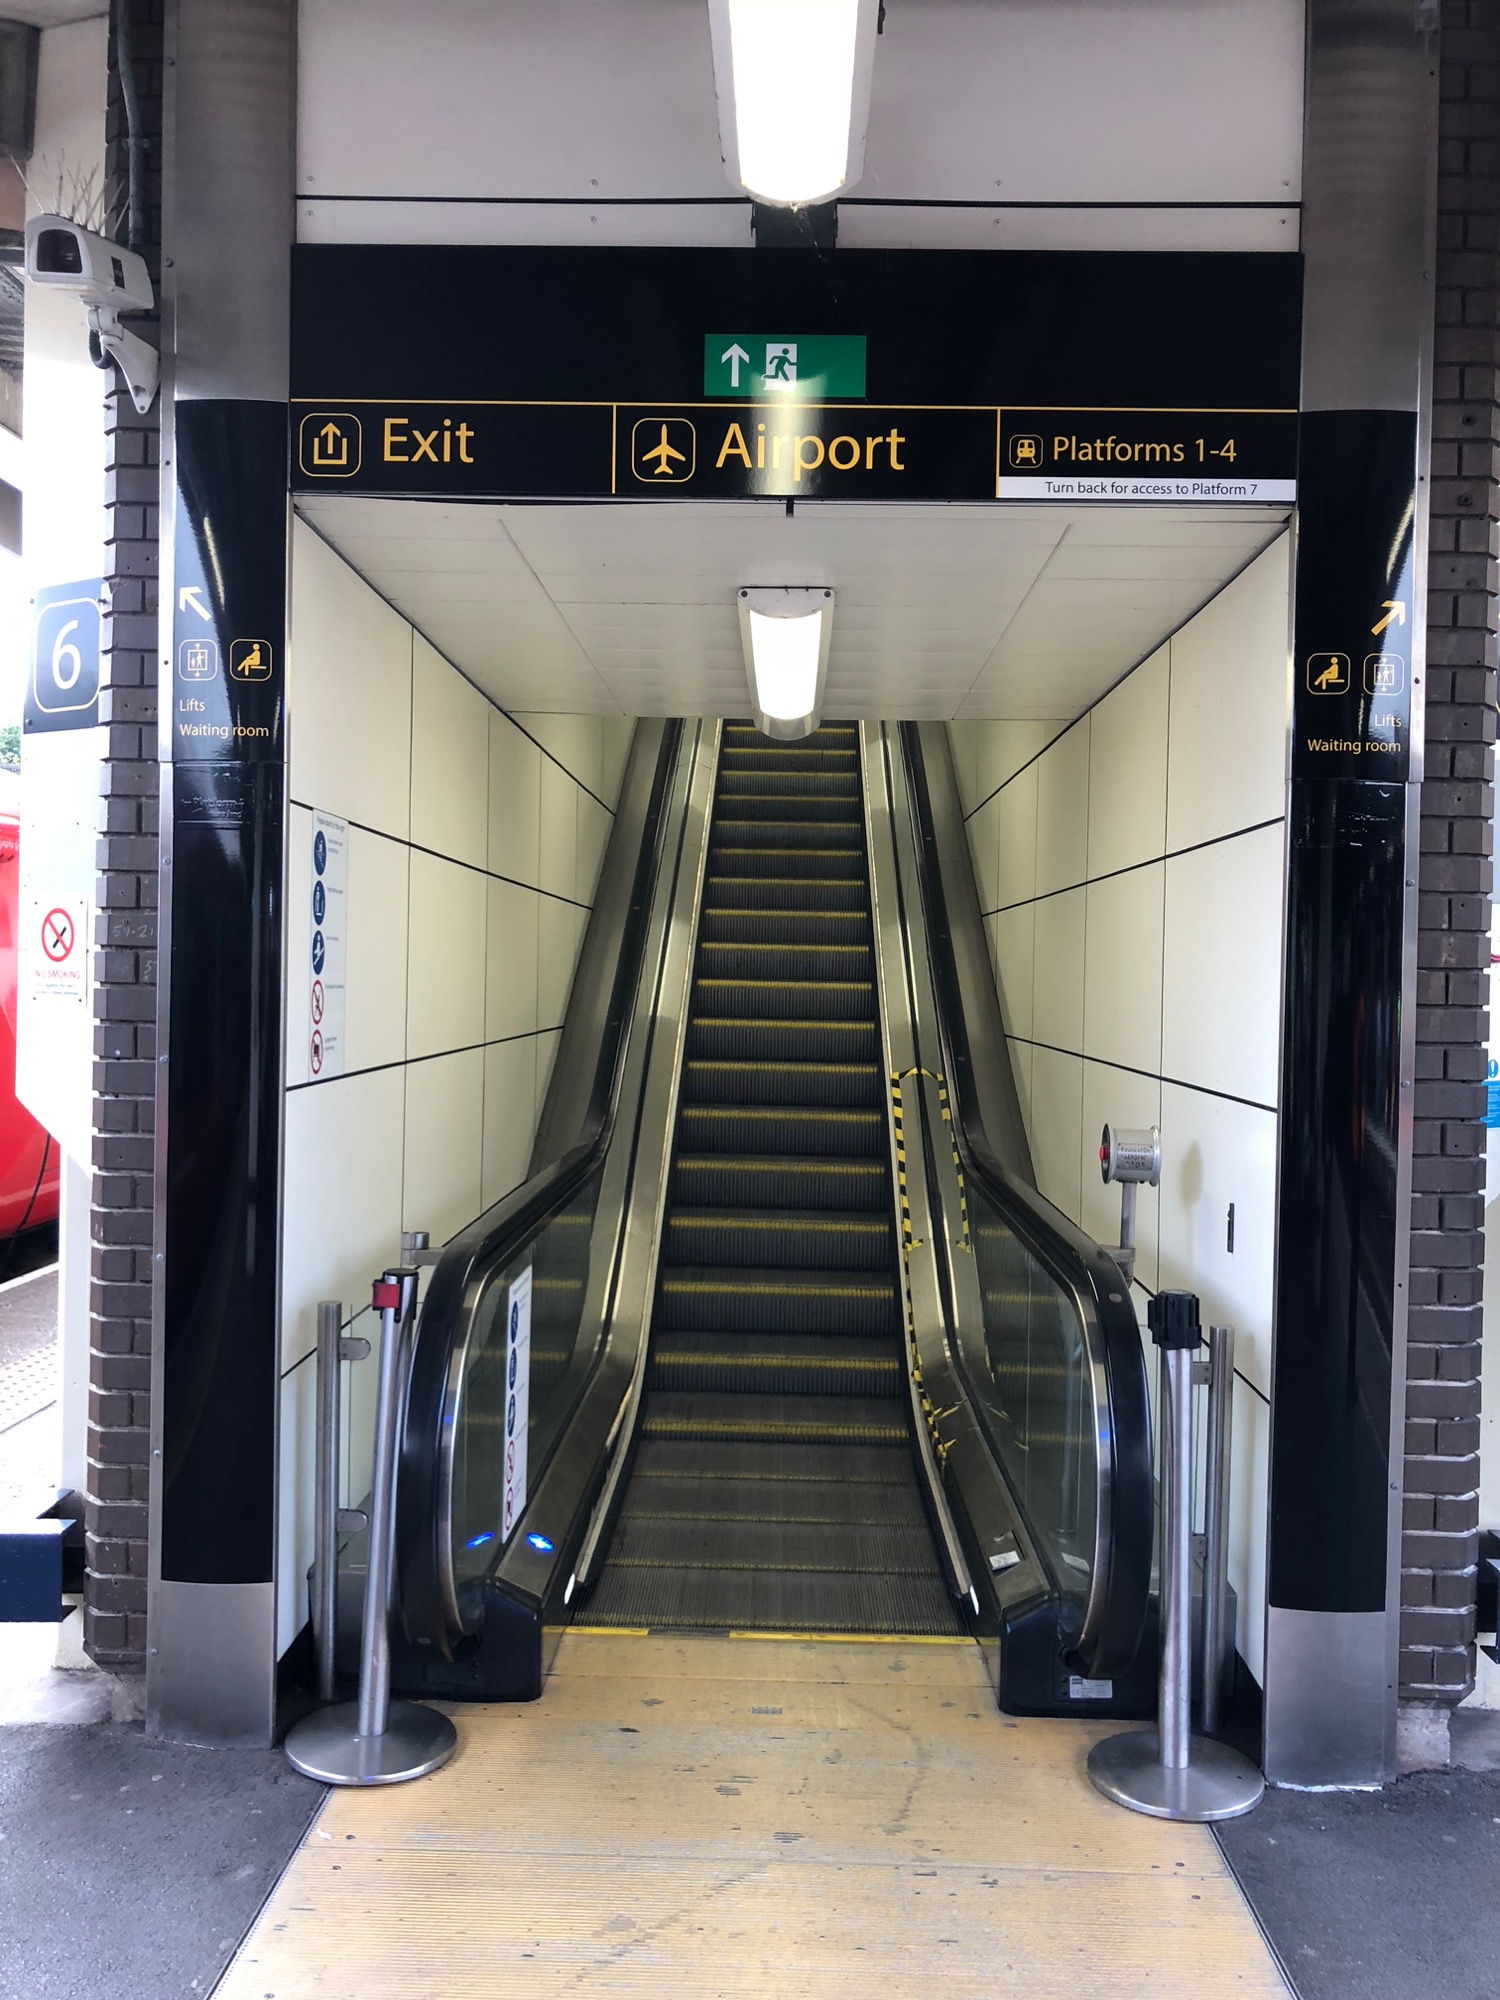 an escalator with a sign